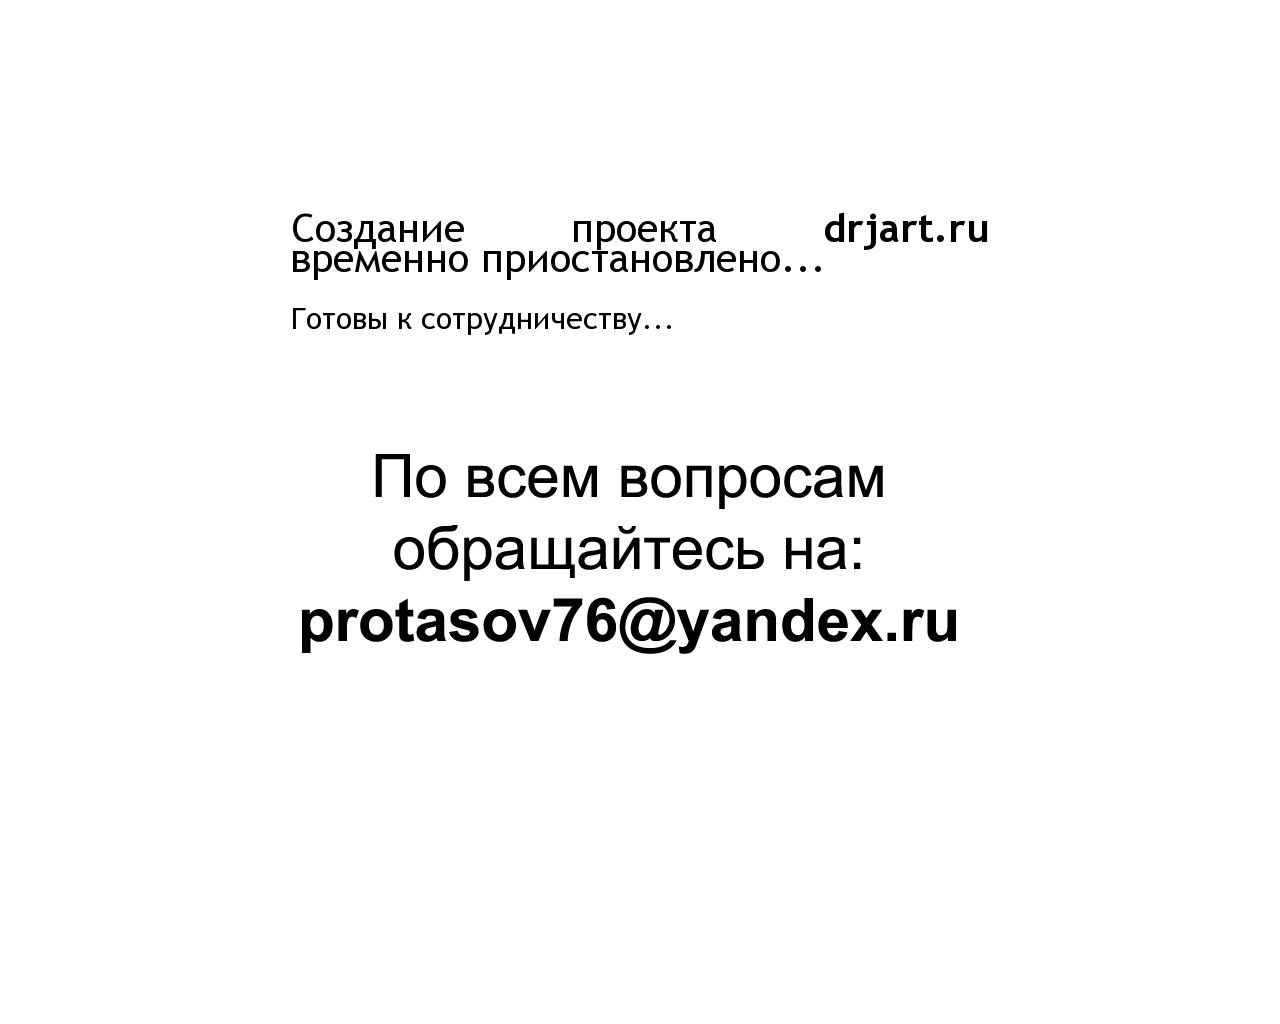 Изображение сайта drjart.ru в разрешении 1280x1024